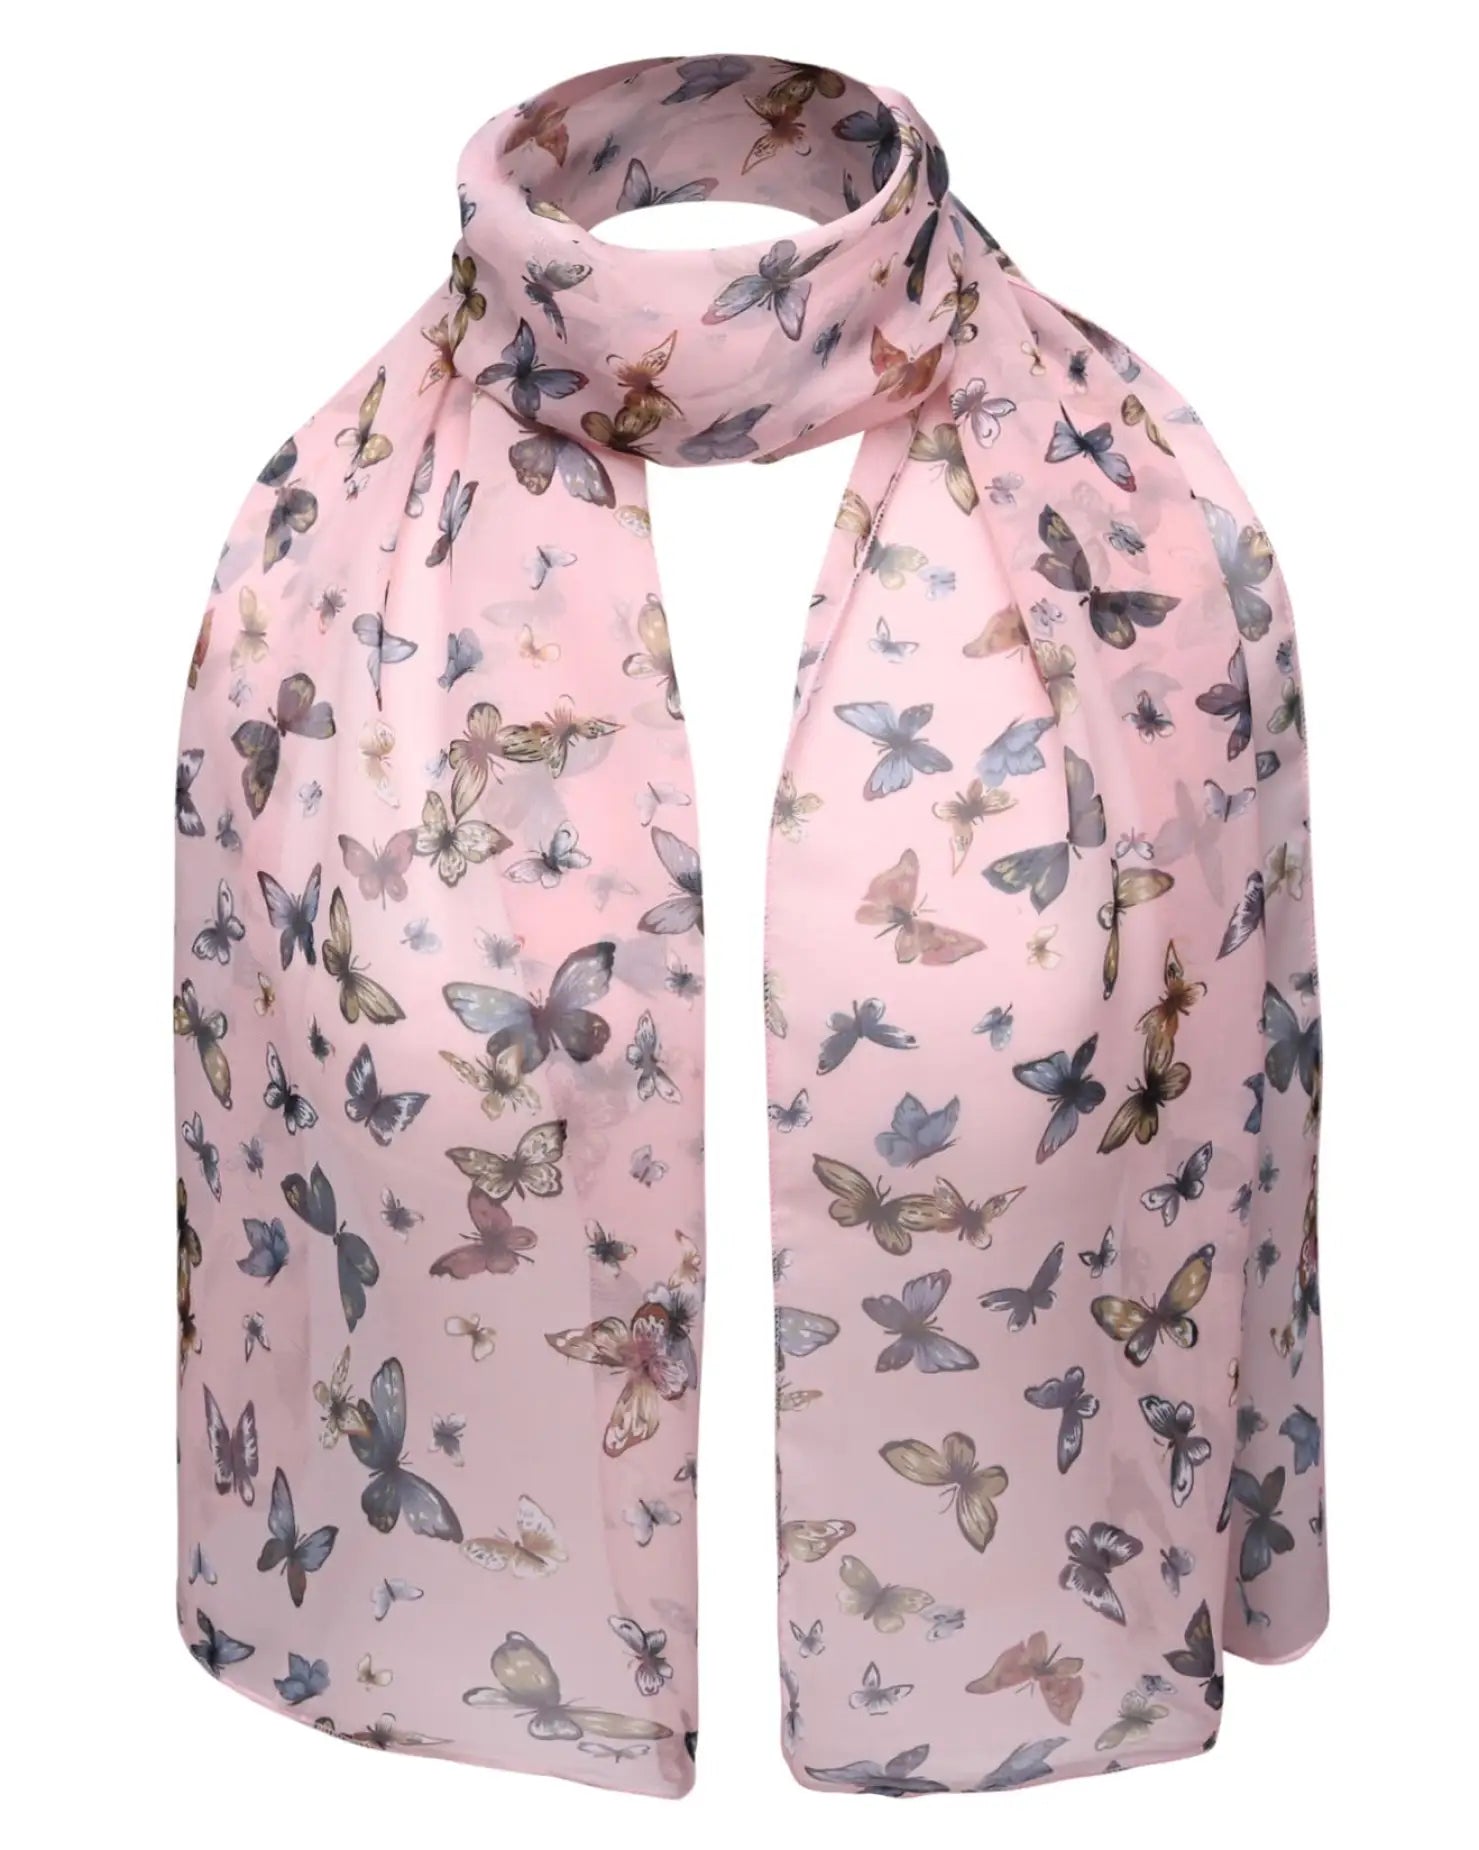 Pink butterfly print scarf: Lightweight, soft & versatile accessory.